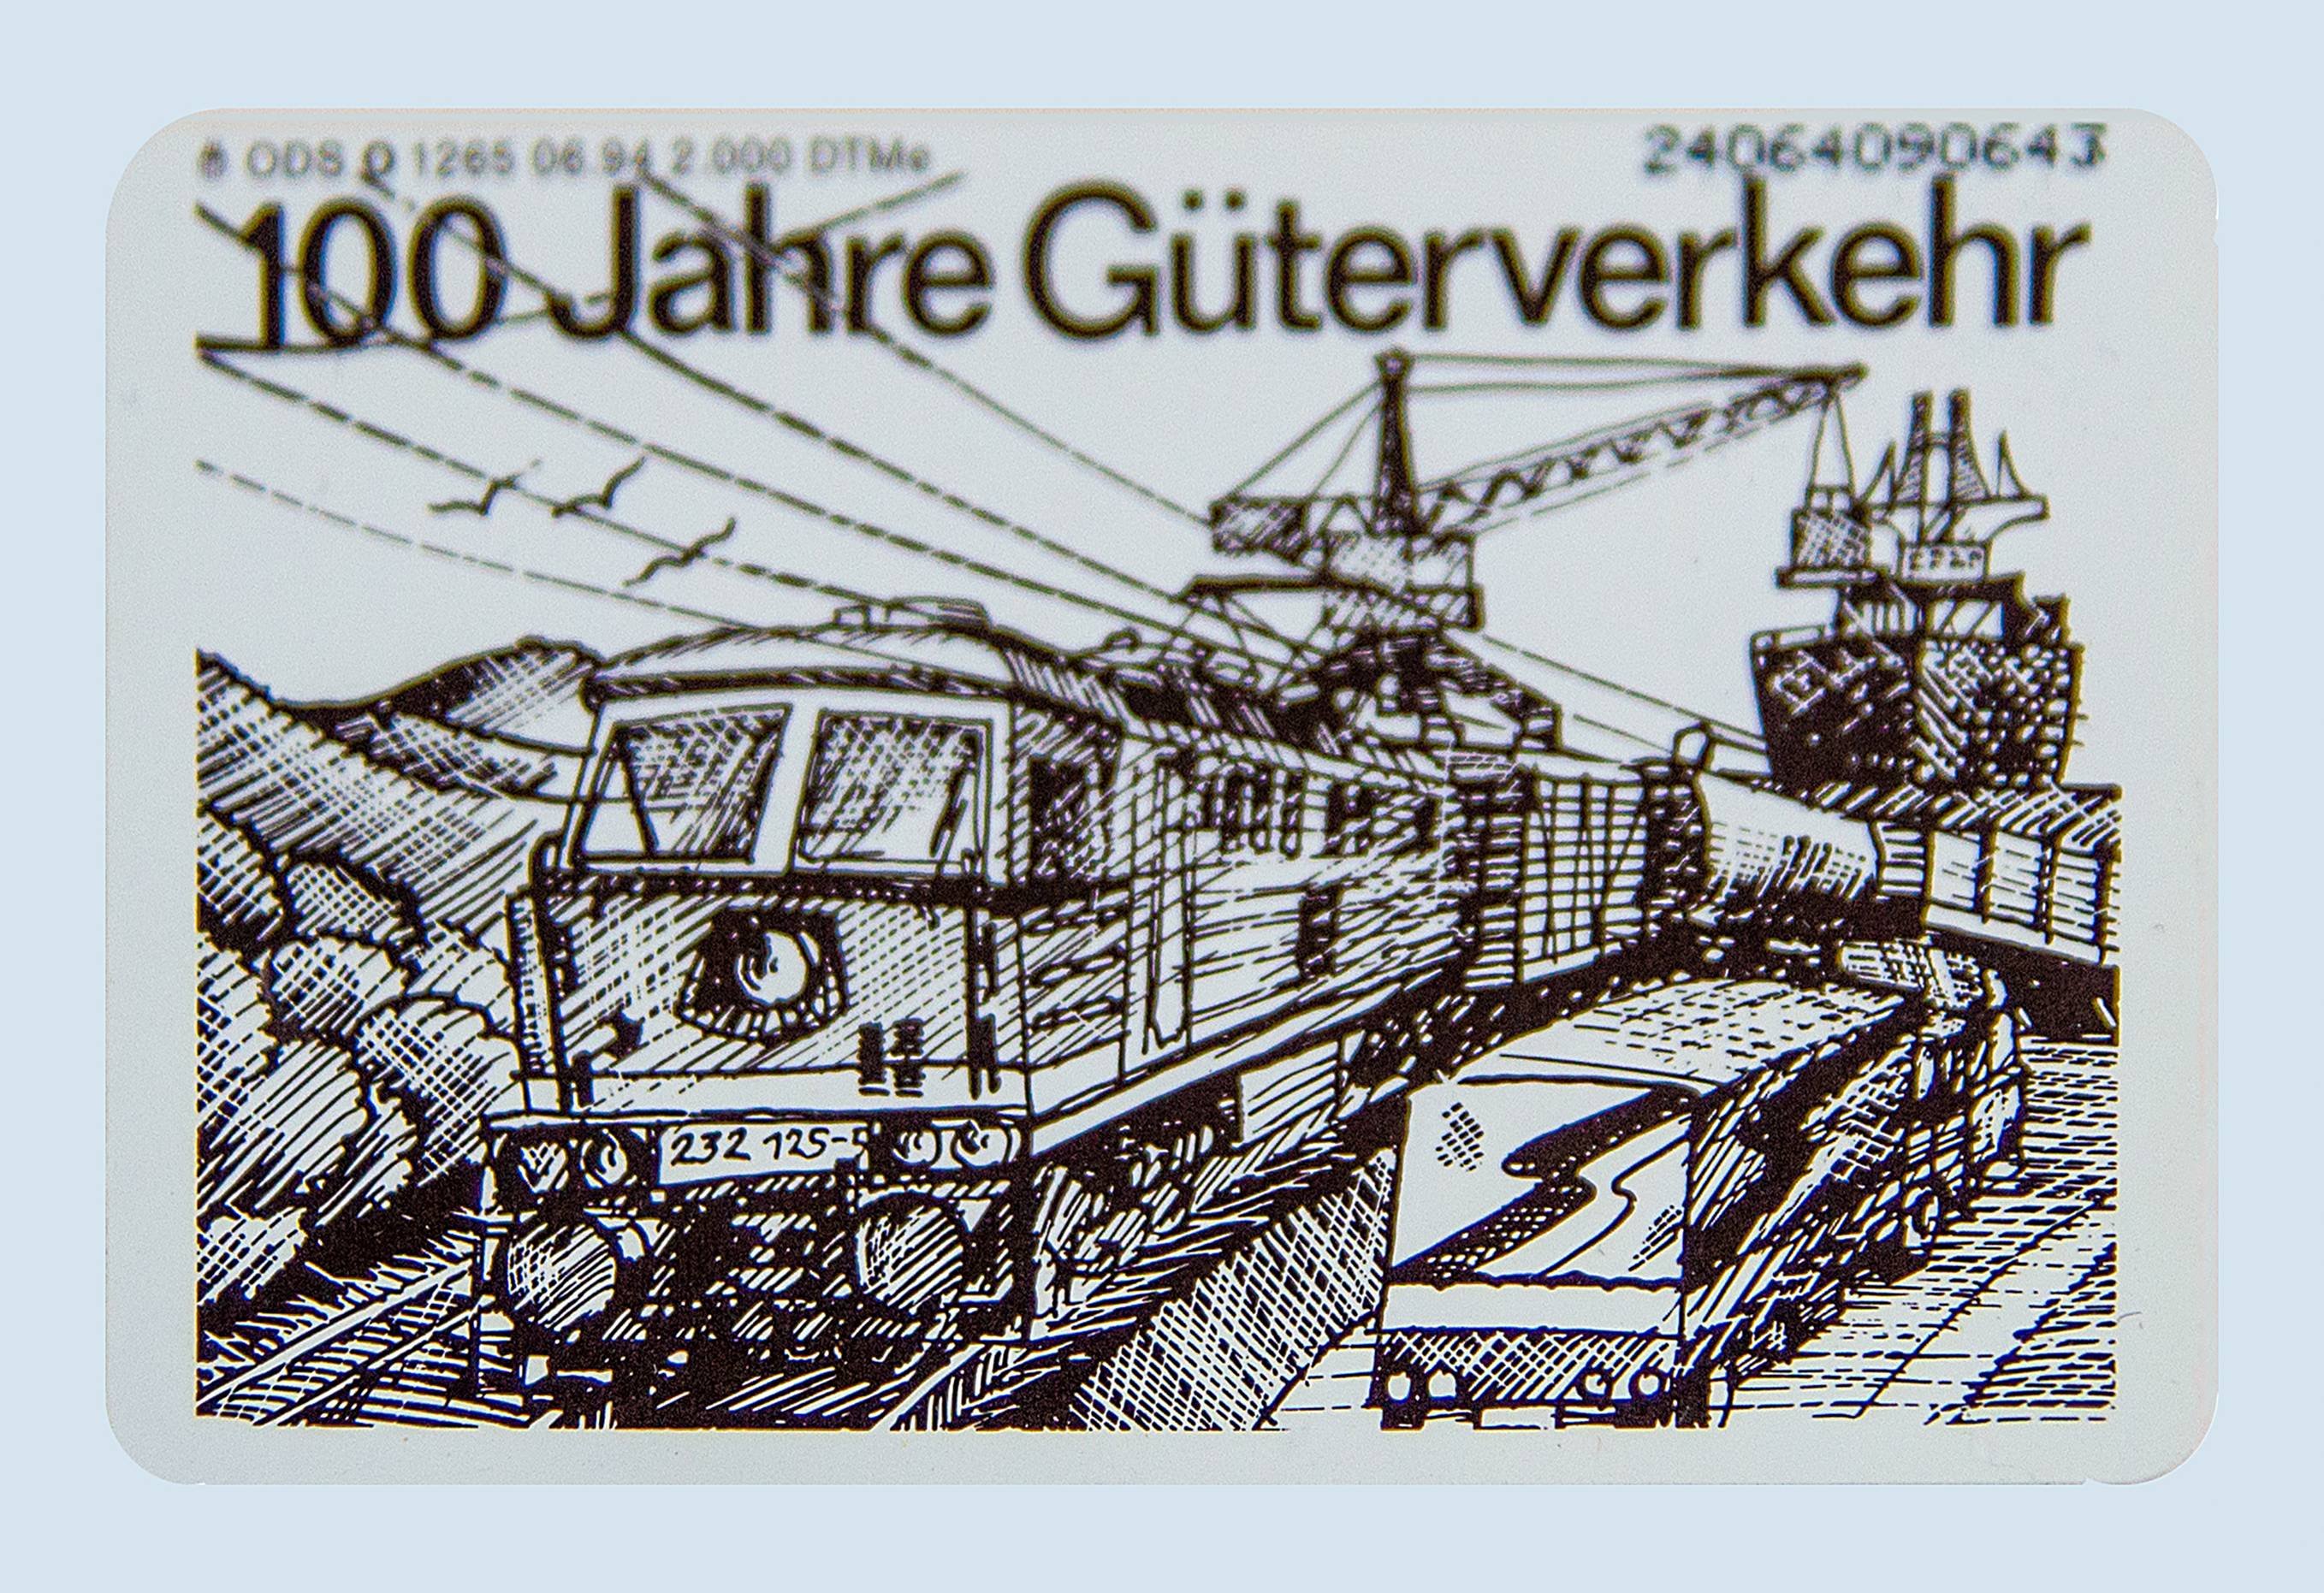 Telefonkarte 6 DM "100 Jahre Güterverkehr" (Verkehrsmuseum Dresden CC BY-NC-SA)